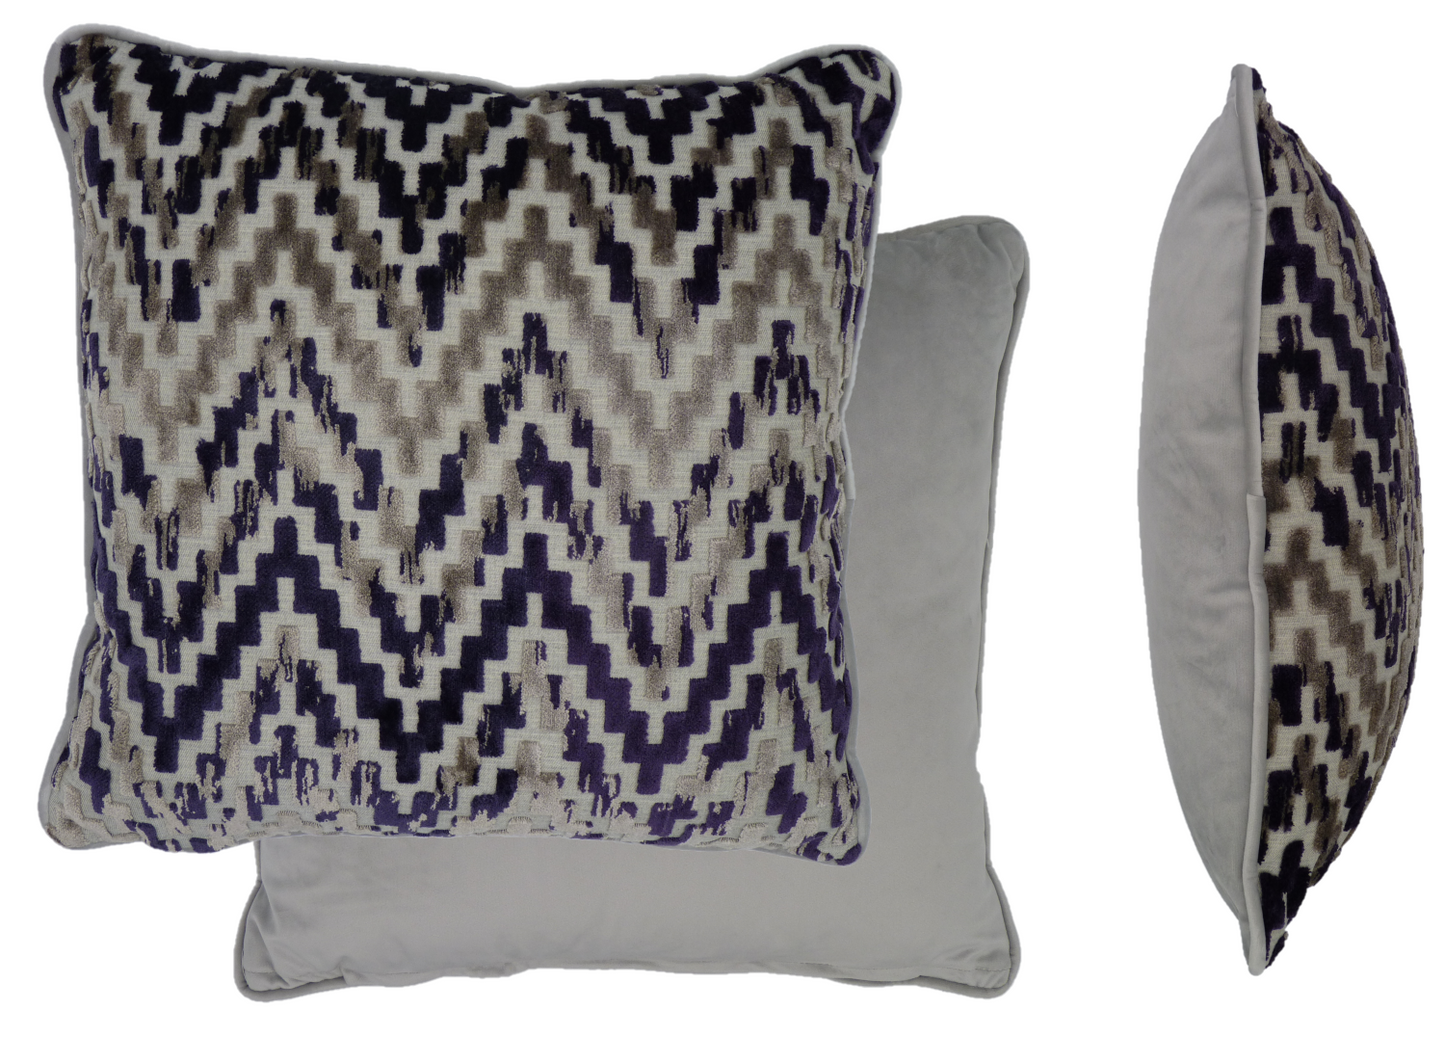 San Remo Purple Velvet Geometric Cushion Cover (45cm x 45cm)